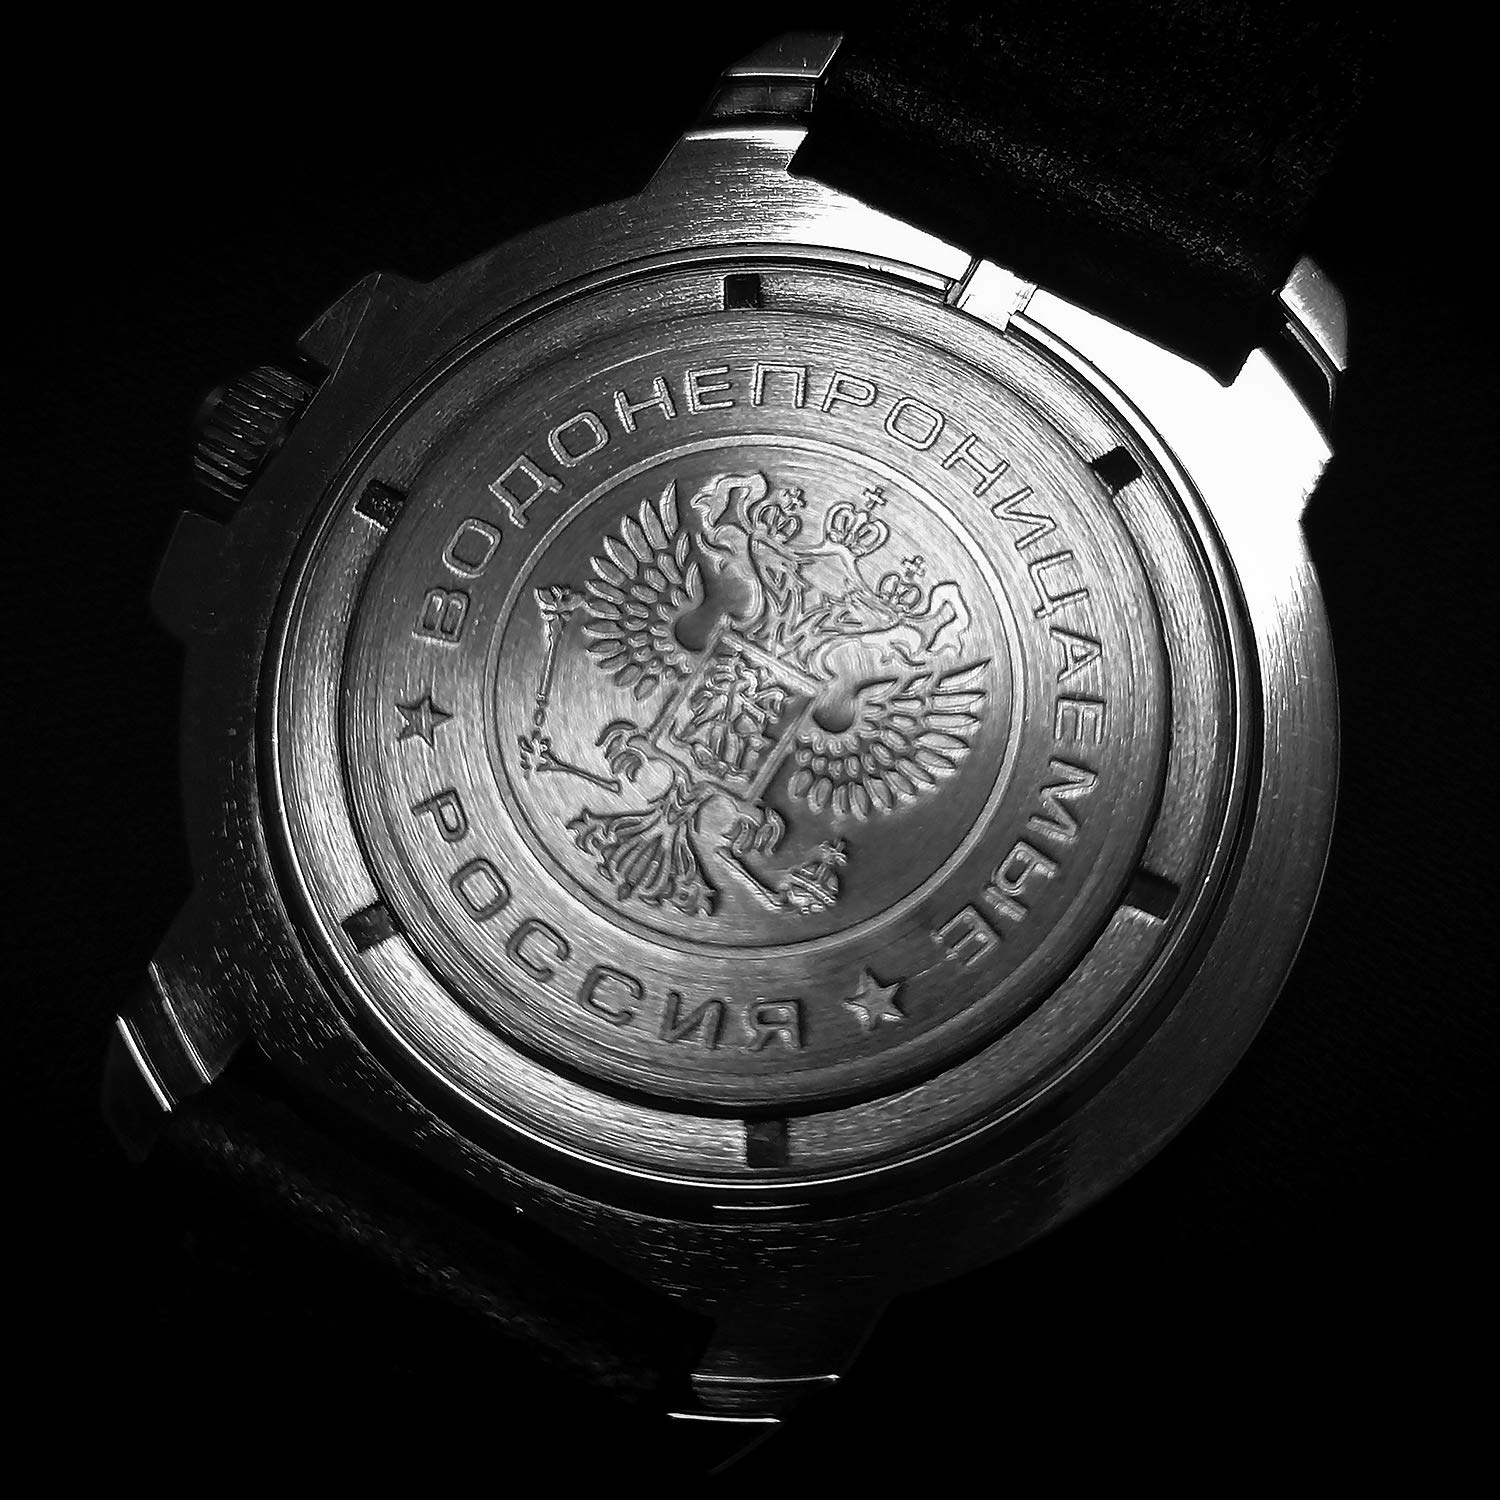 VOSTOK | Komandirskie Red Star Army Commander Russian Military Mechanical Wrist Watch | Fashion | Business | Casual Men’s Watches | Series 186